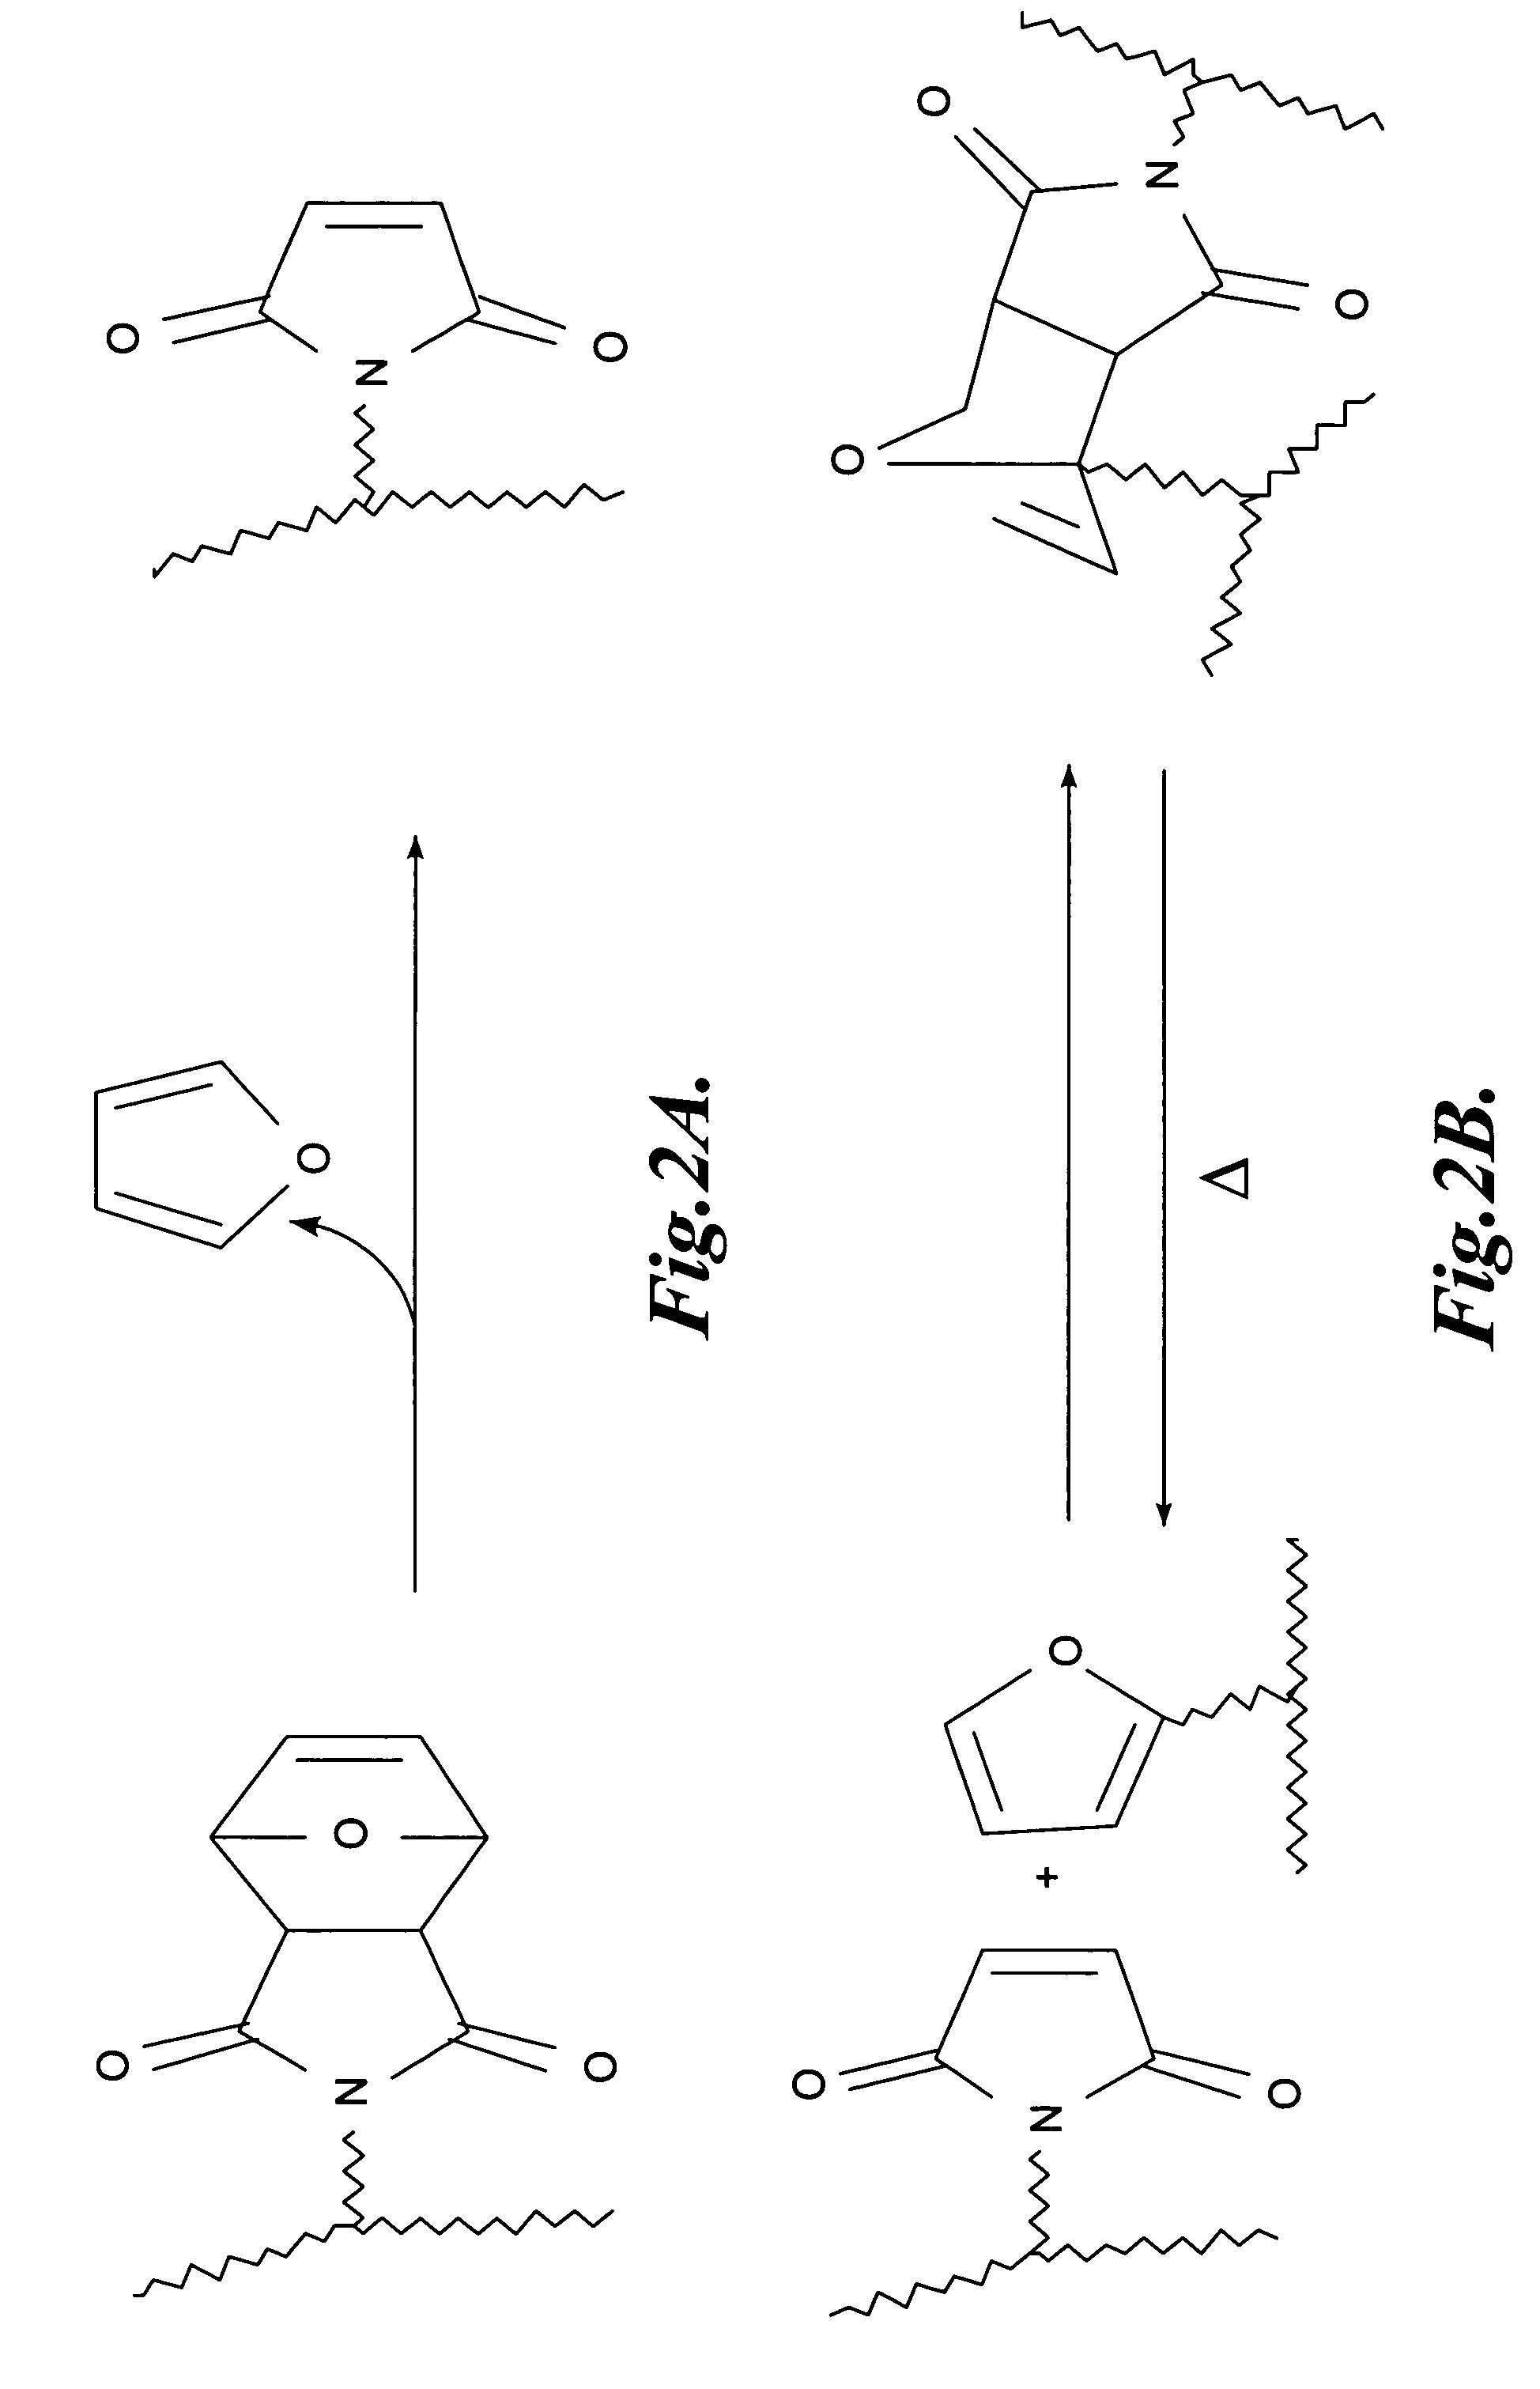 Reversible crosslinking method for making an electro-optic polymer